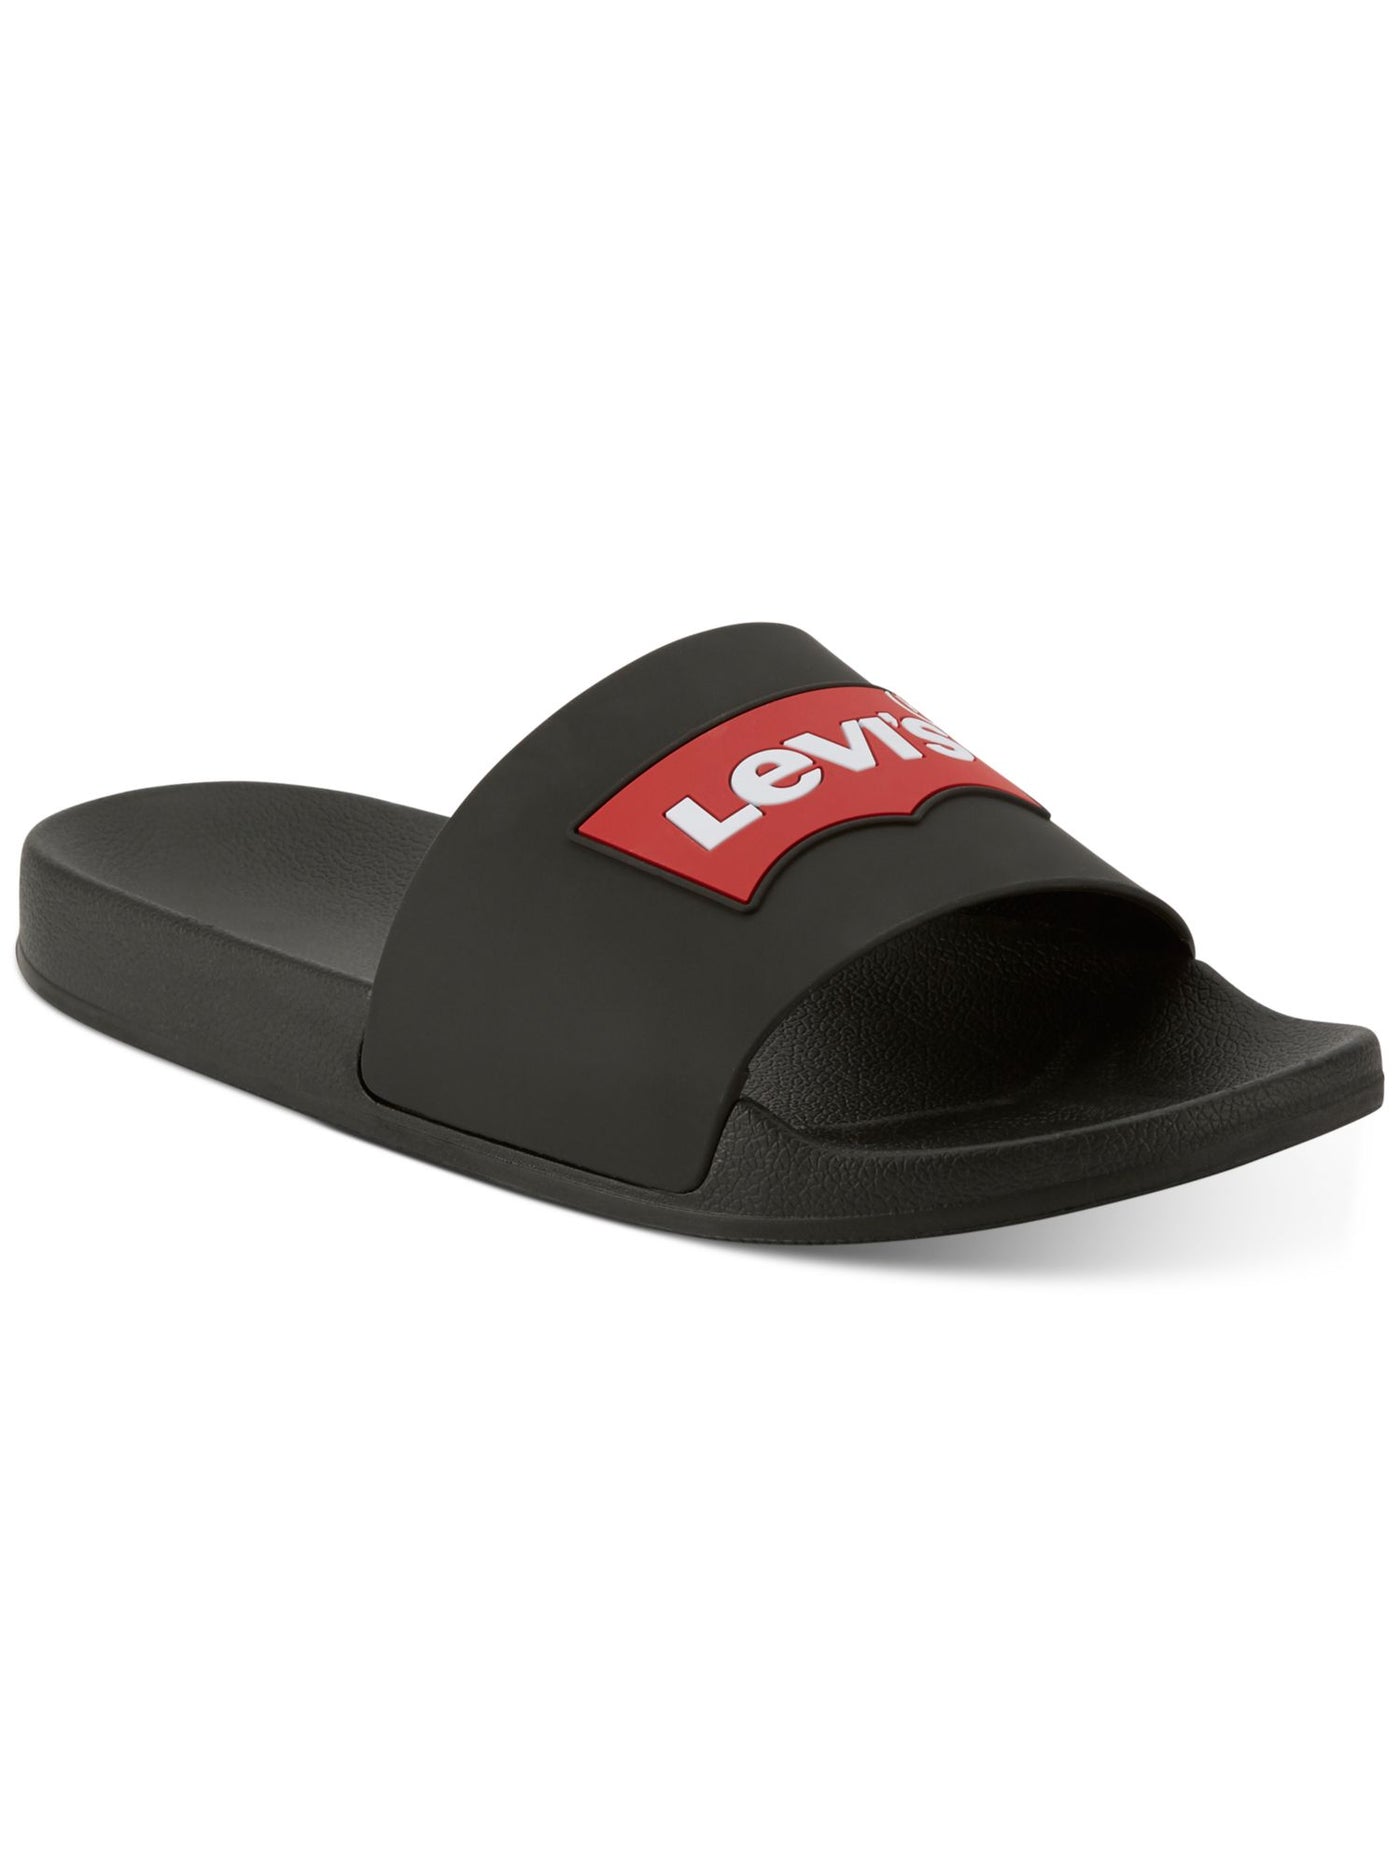 LEVI'S Mens Black Padded Batwing-logo Open Toe Slip On Slide Sandals Shoes 8